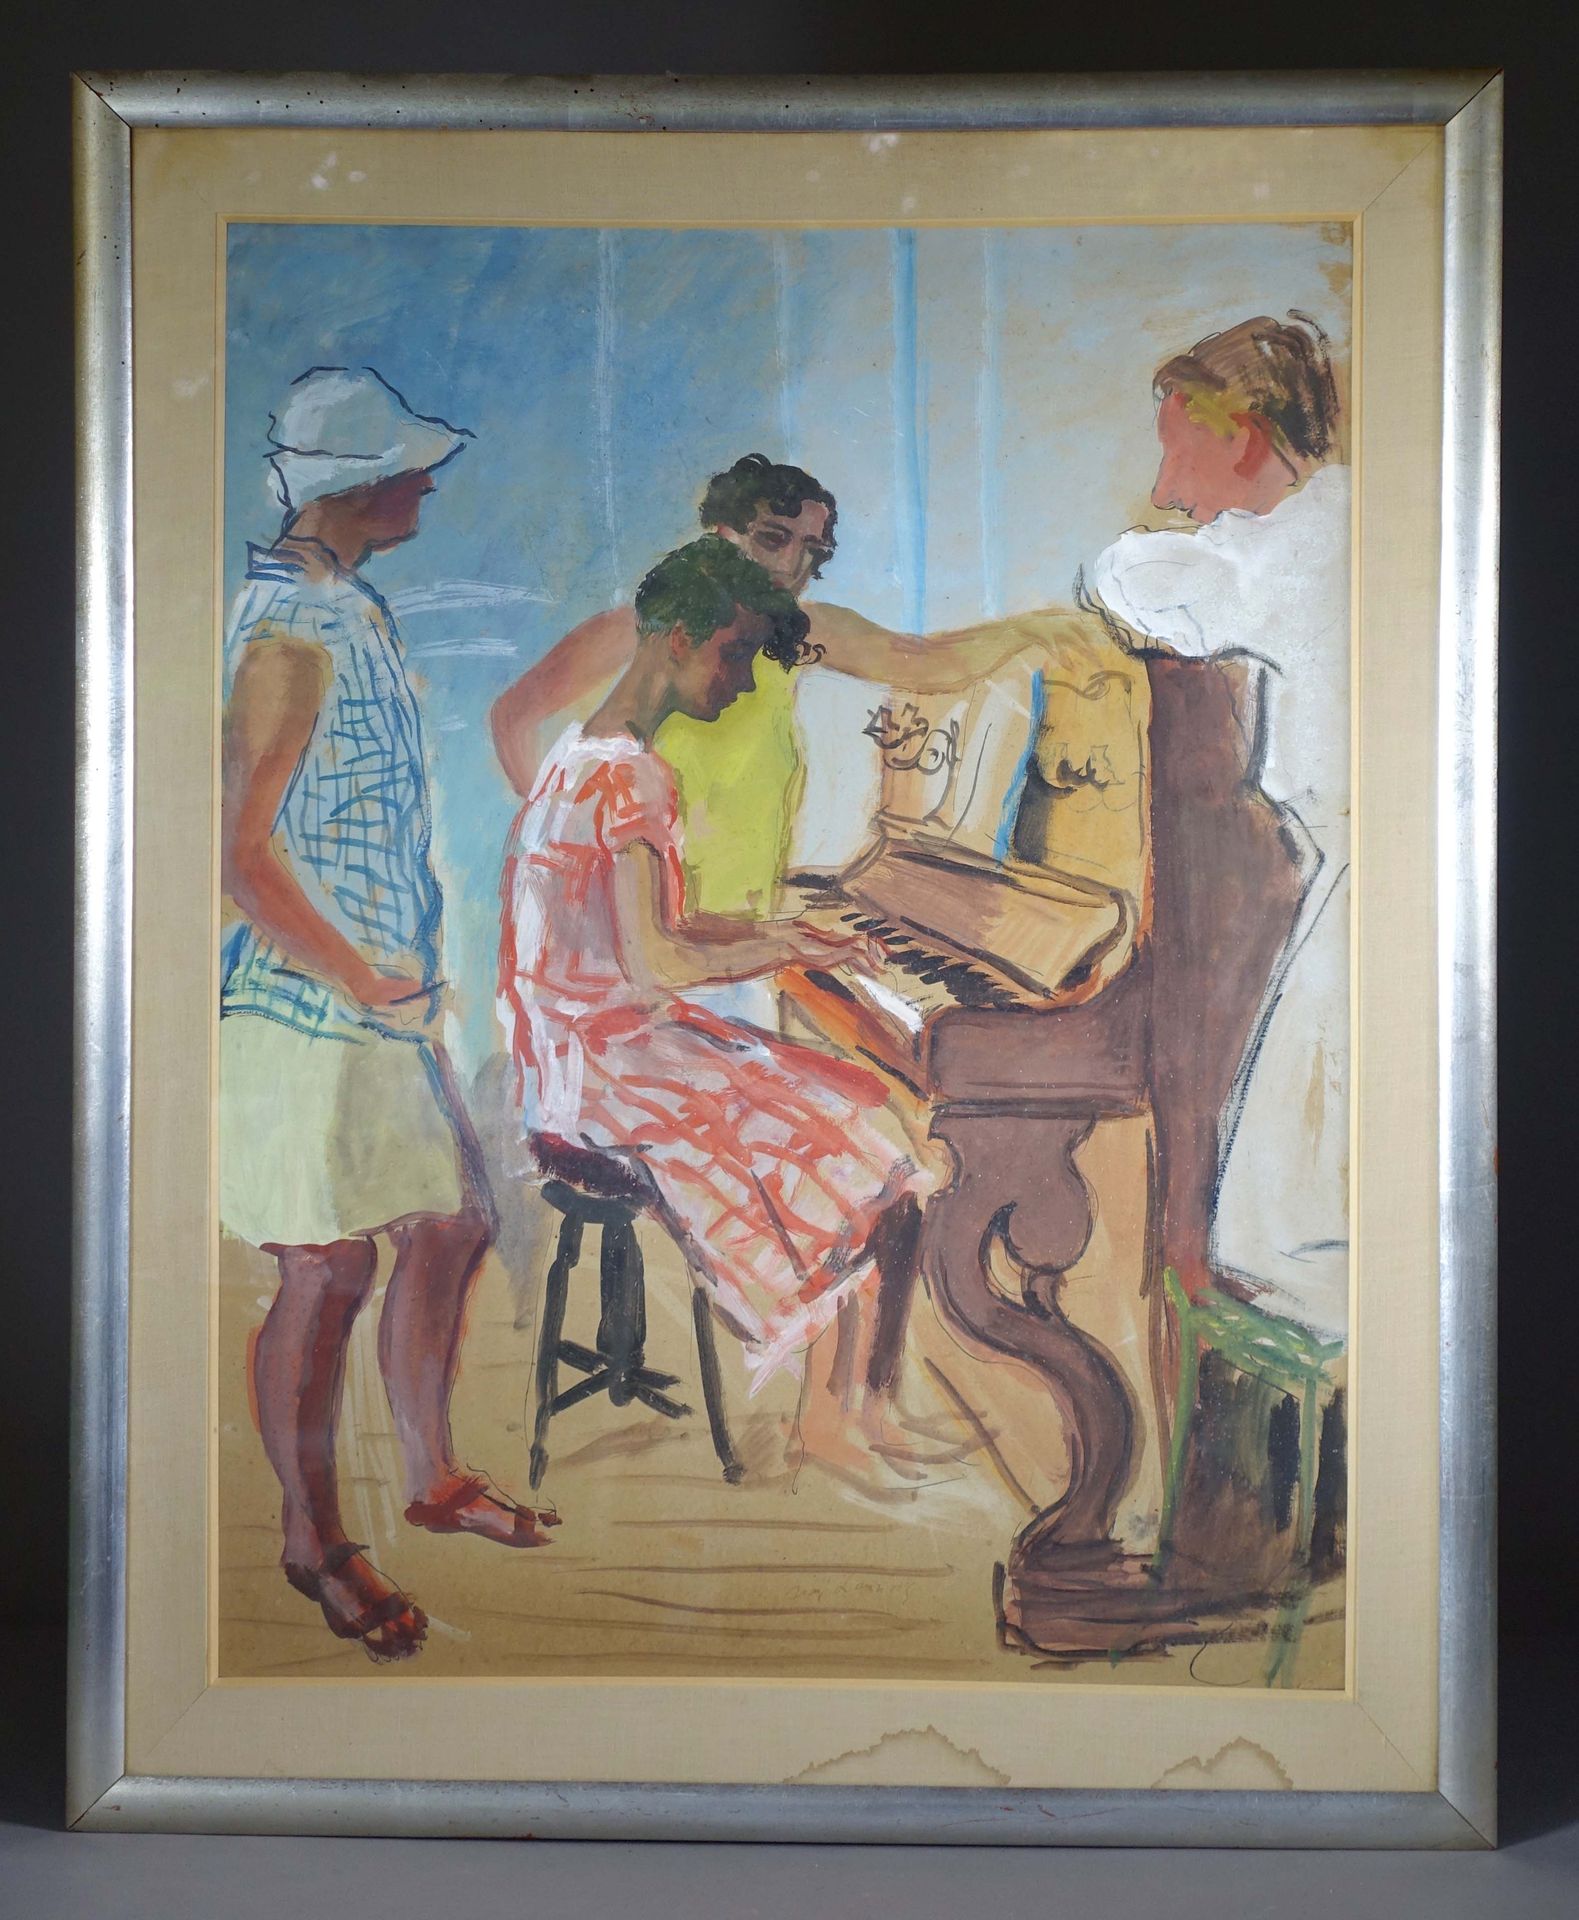 Null 让-朗努瓦(Jean LAUNOIS) (1898-1942)
钢琴音乐会
印度墨水和水粉画，用铅笔签名。
(在玻璃下装框)。
72 x 56 cm